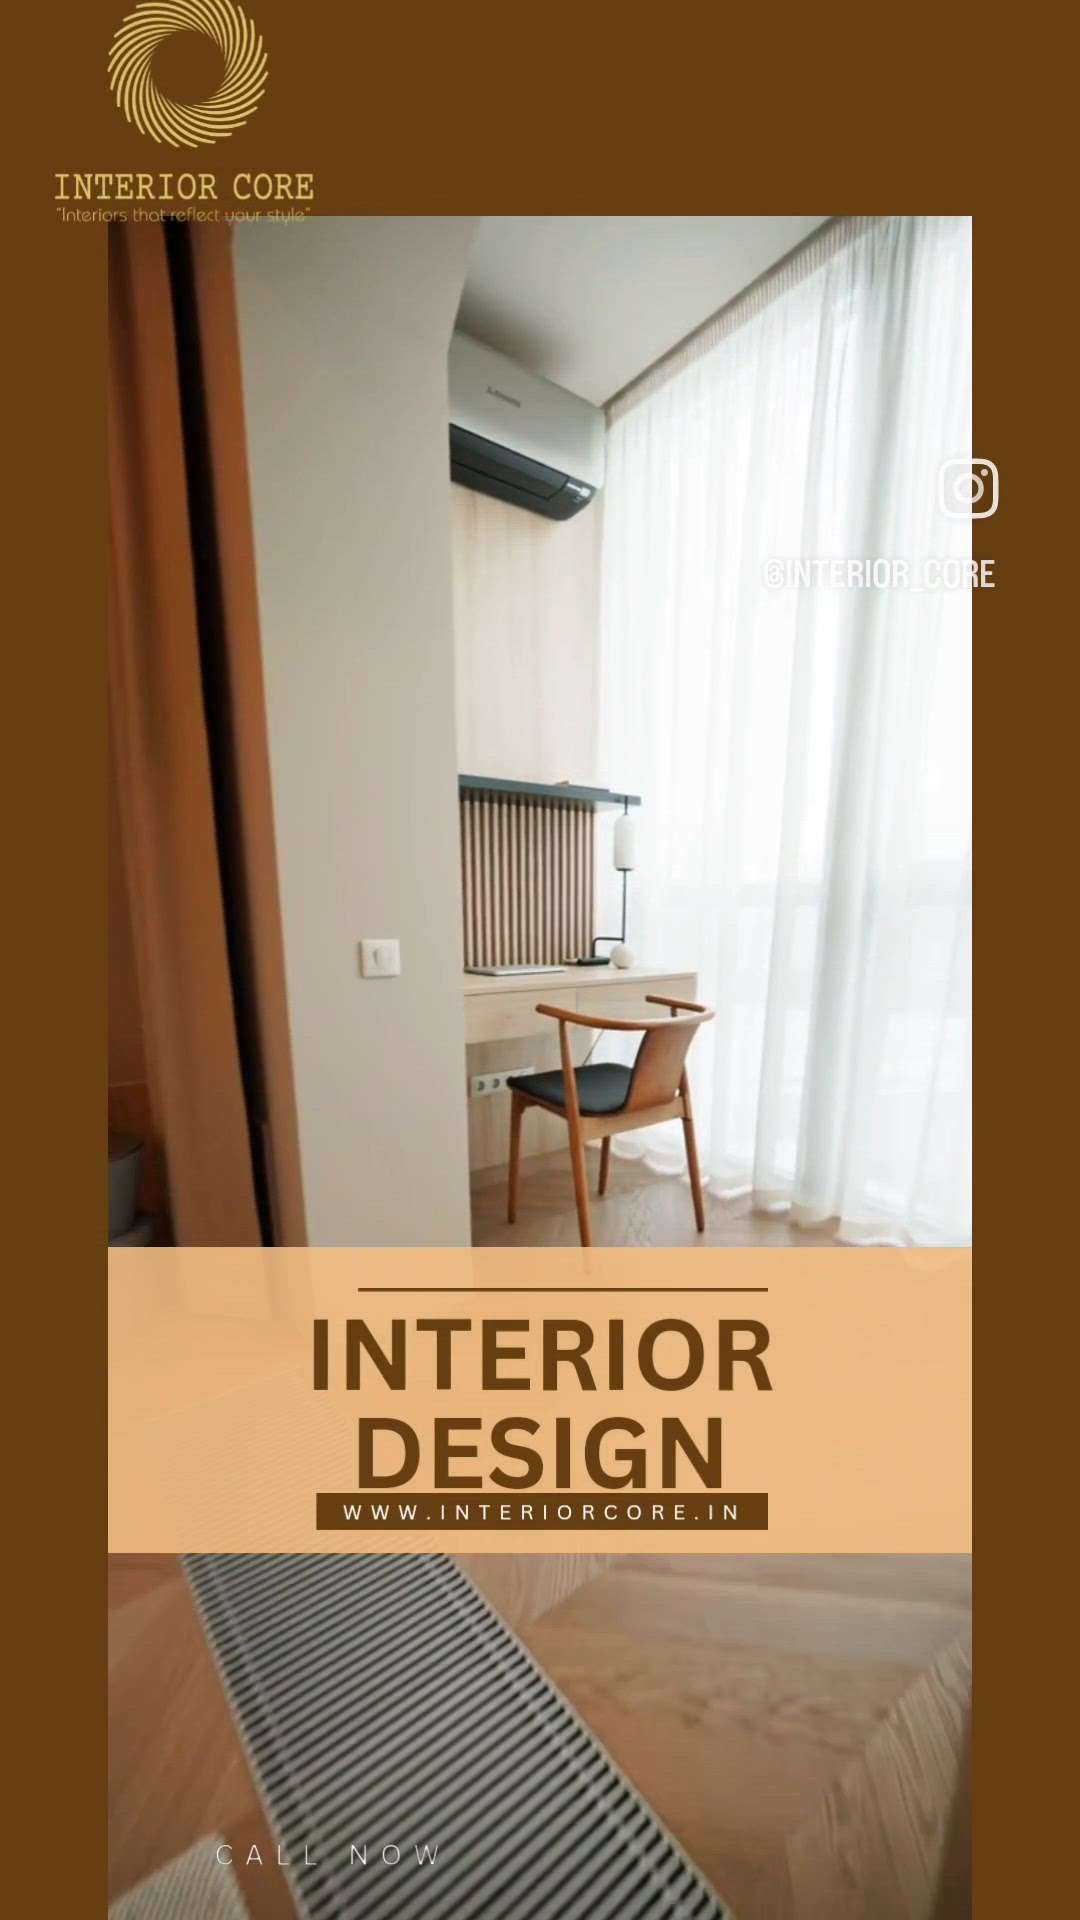 Interior Designer.
Call now 098918 30873 
Website -www.interiorcore.in

#facebookreels #interiordesign #viralreels #posterdesign #beautiful #modularkitchen